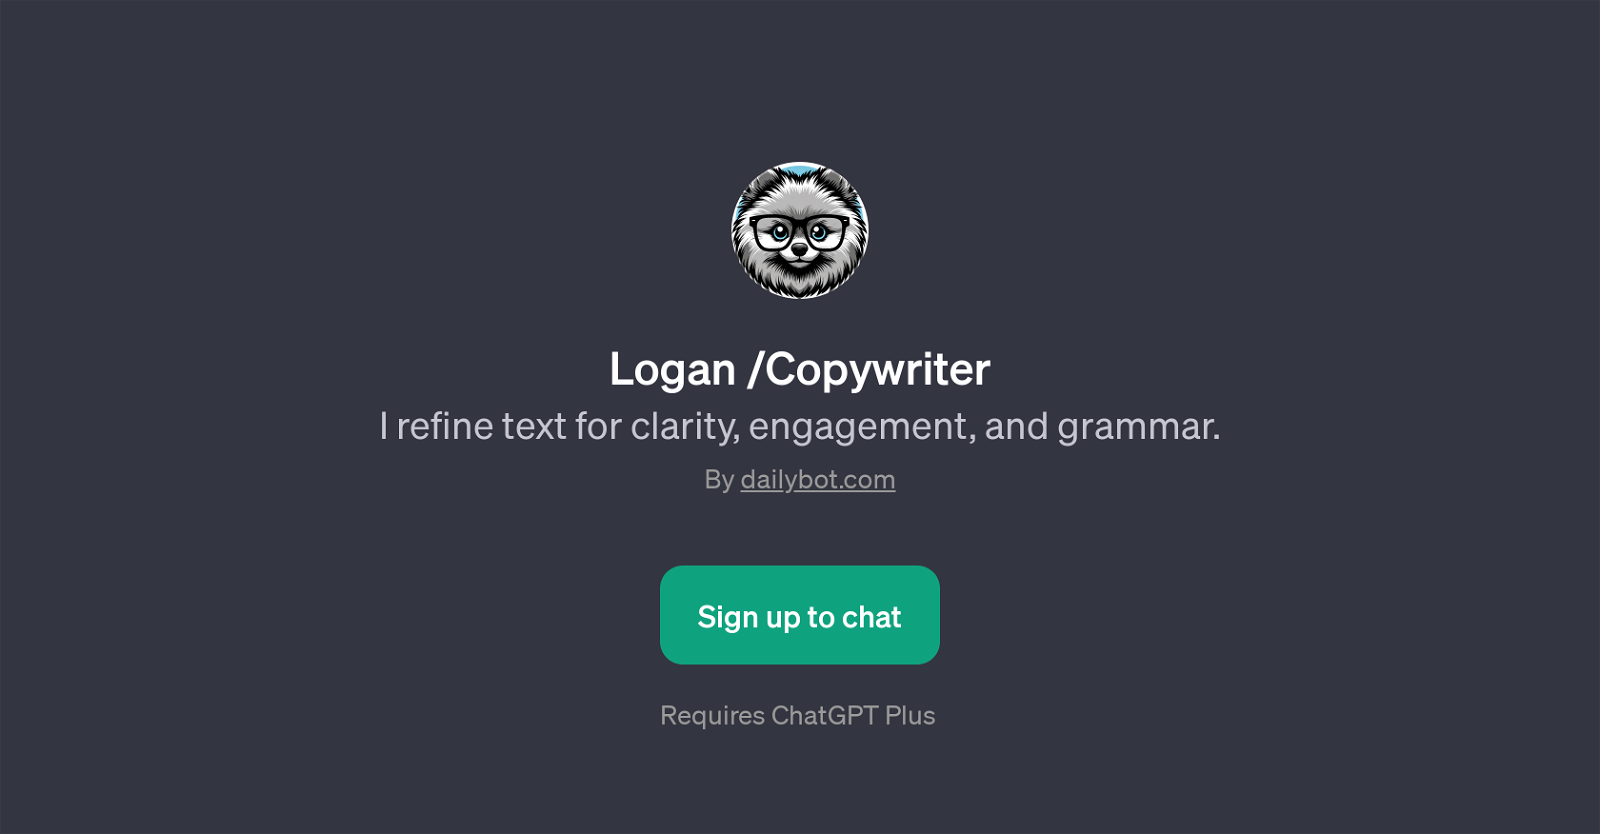 Logan /Copywriter website